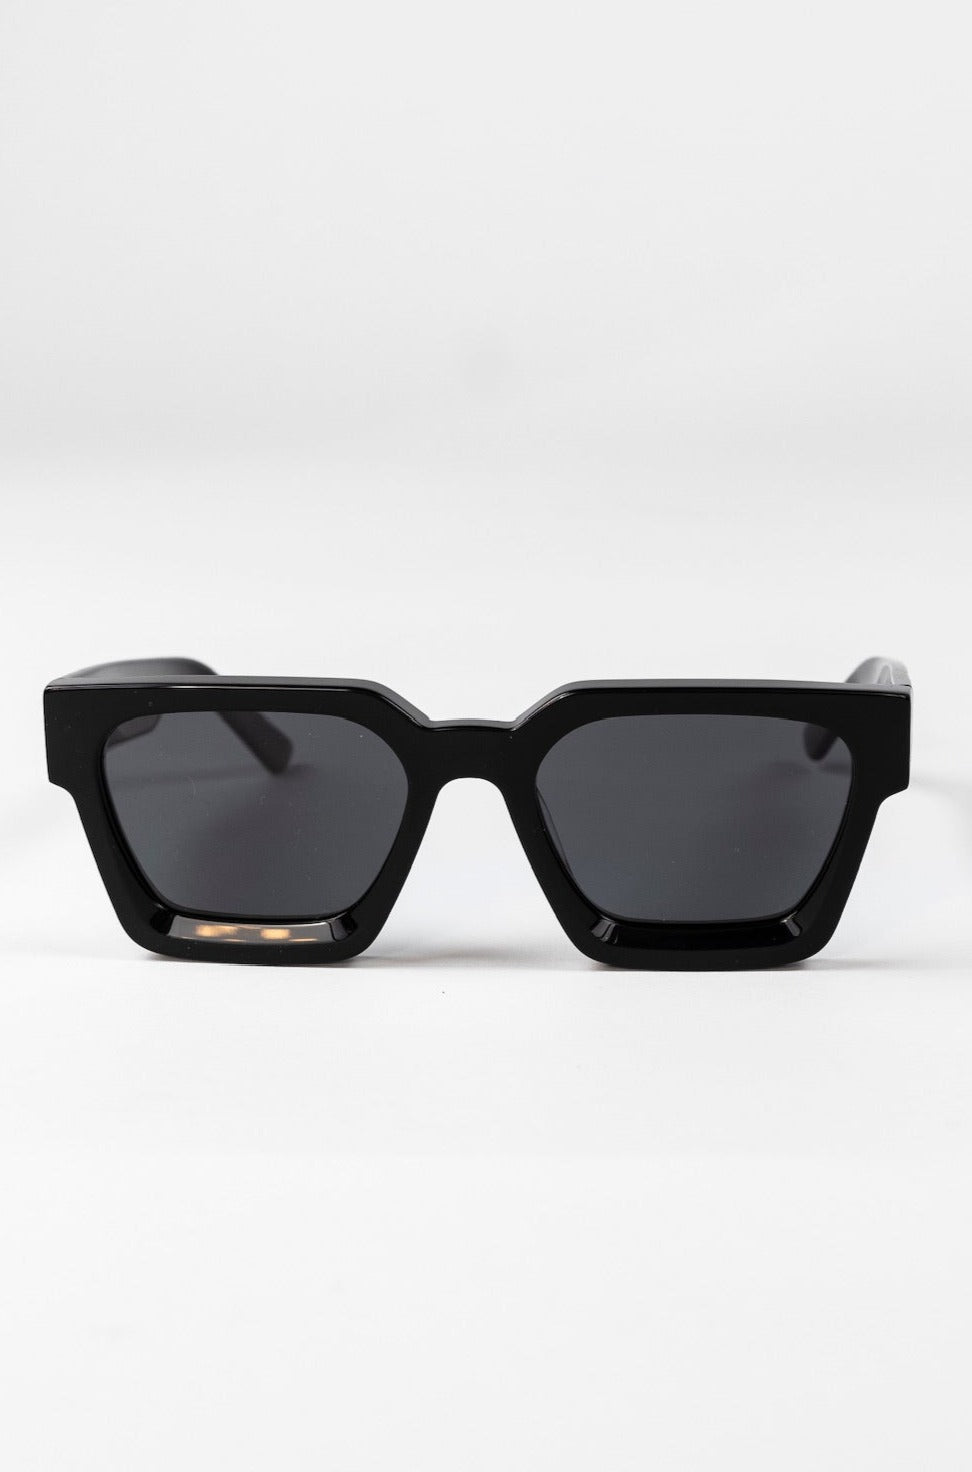 Blaise Chunky Sunglasses in Jet Black